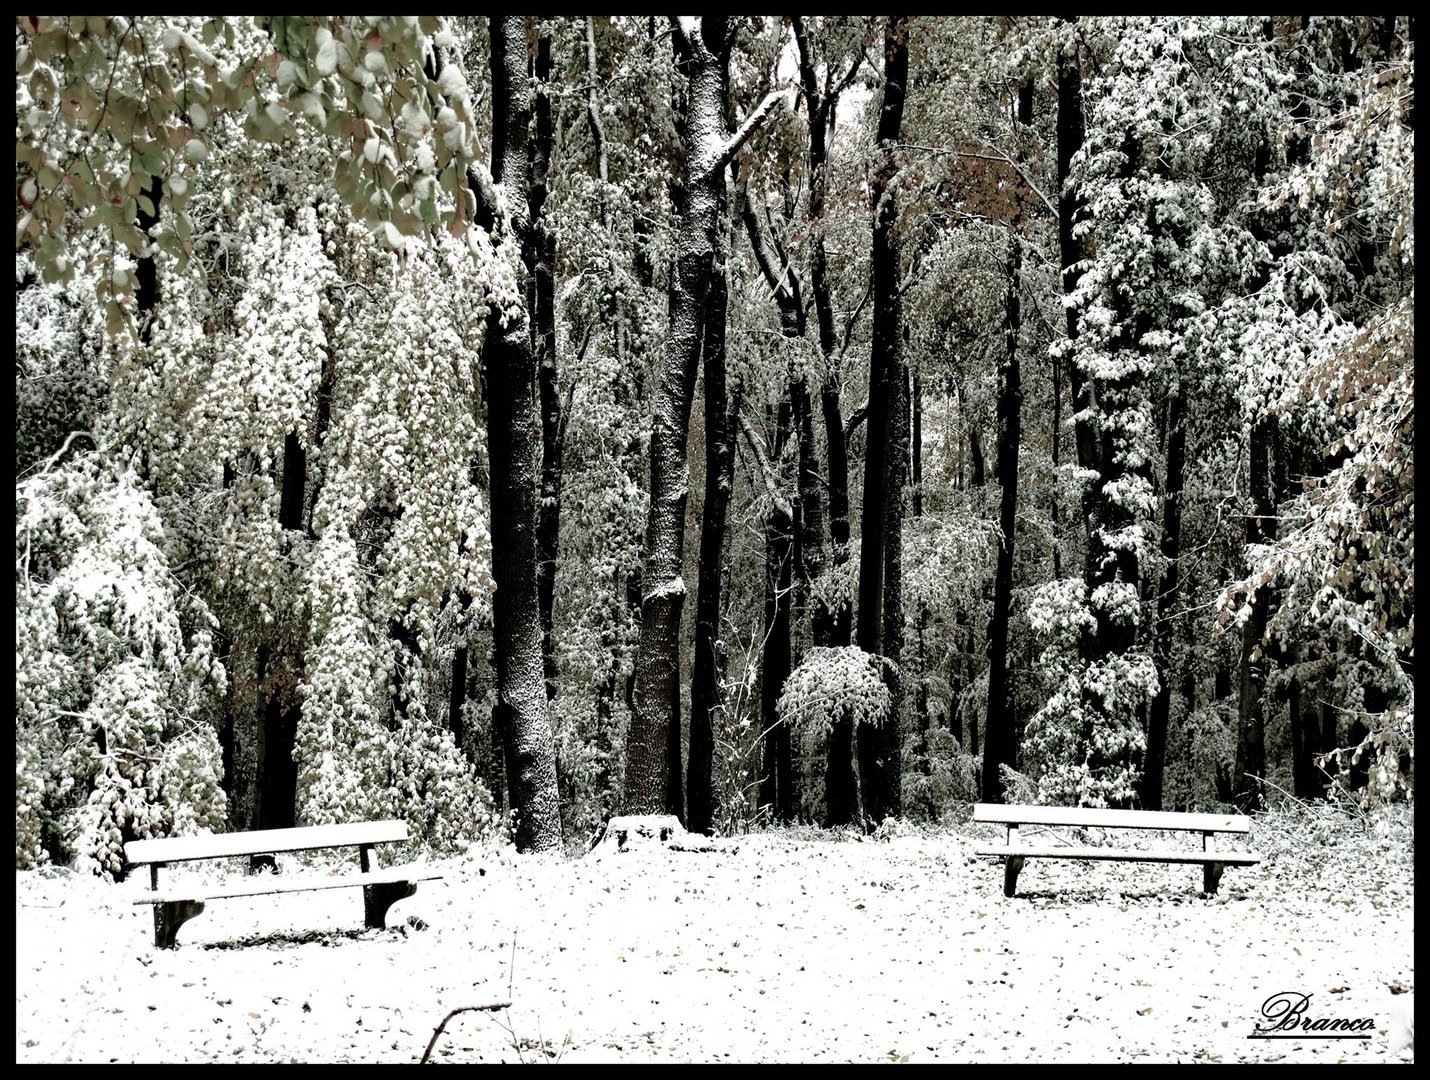 Schne in Wienerwald